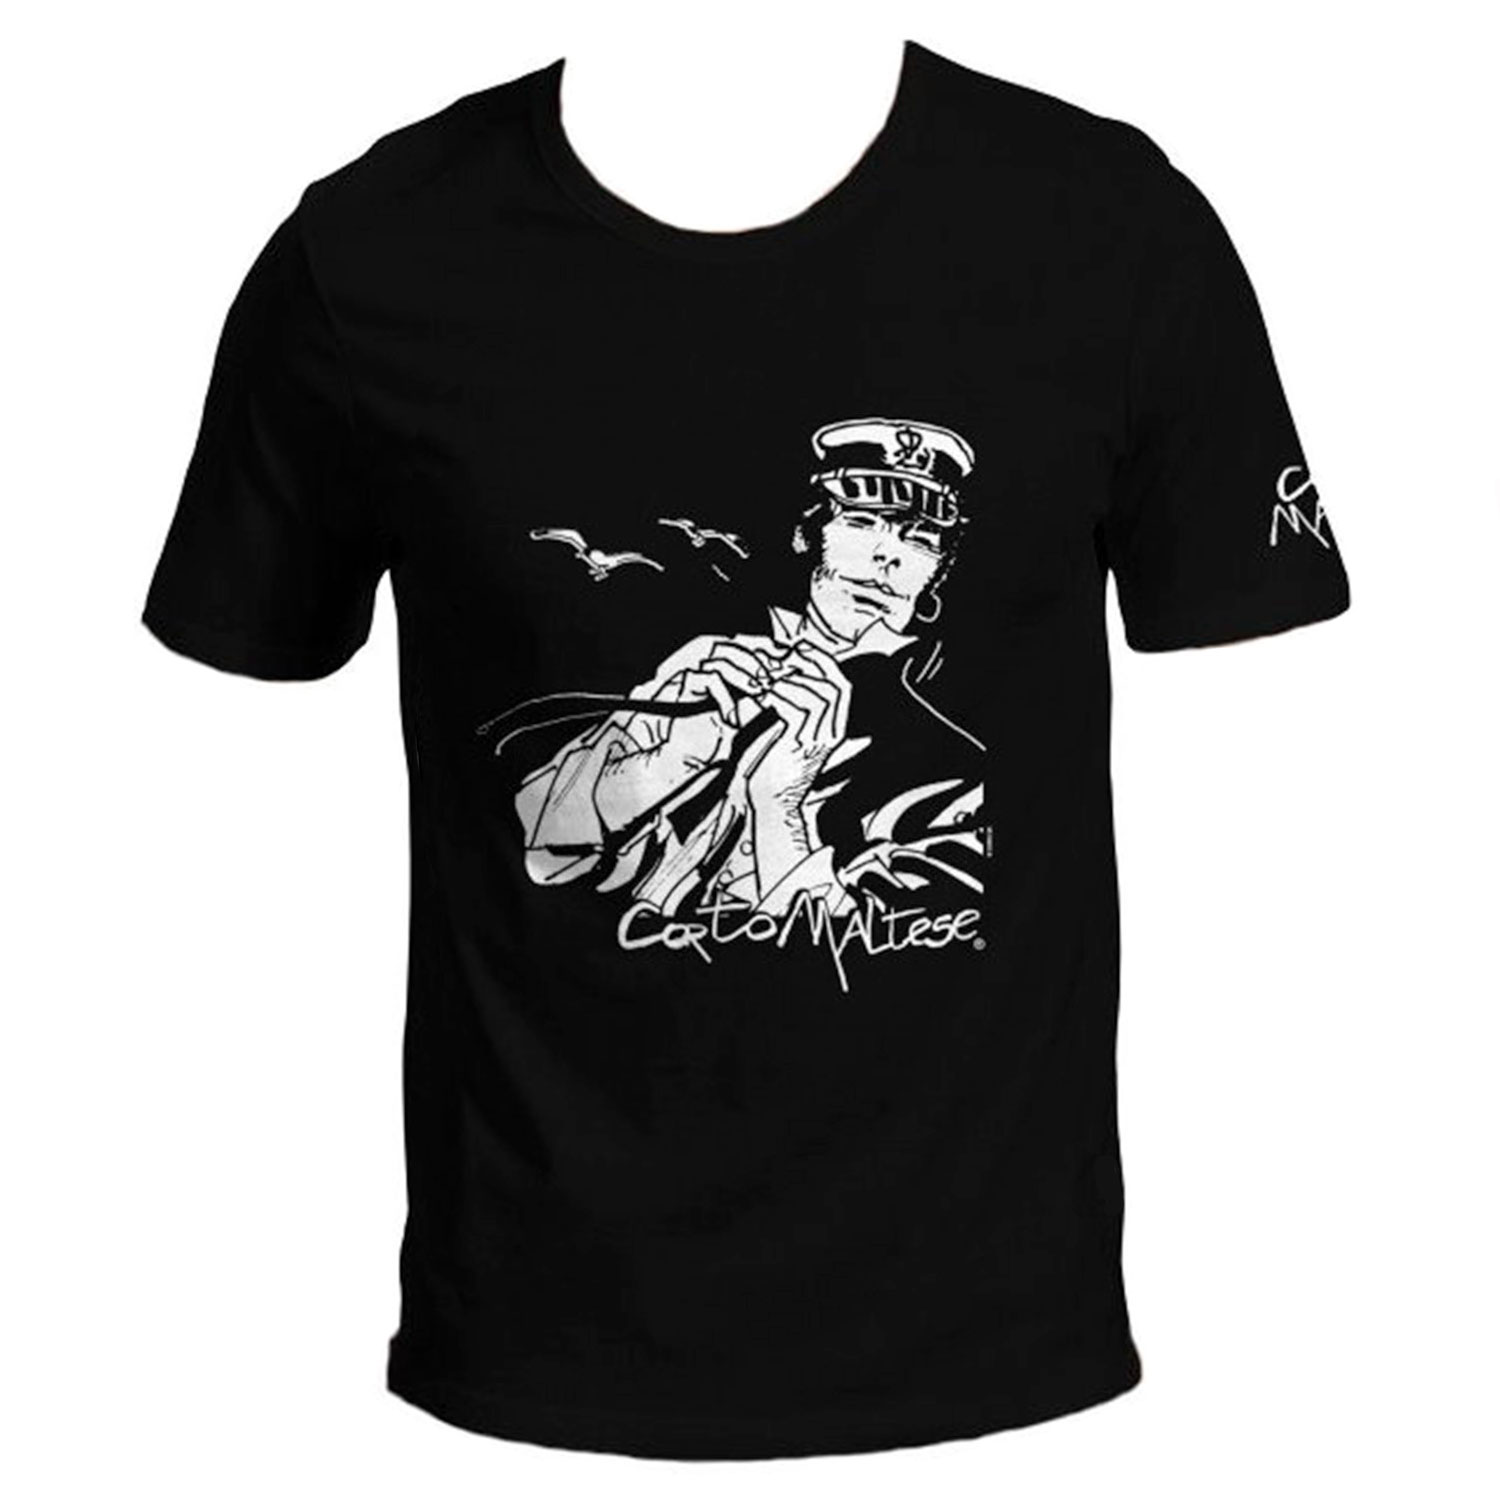 T-shirt Hugo Pratt : Corto Maltese nel vento - Nero - Taglia S